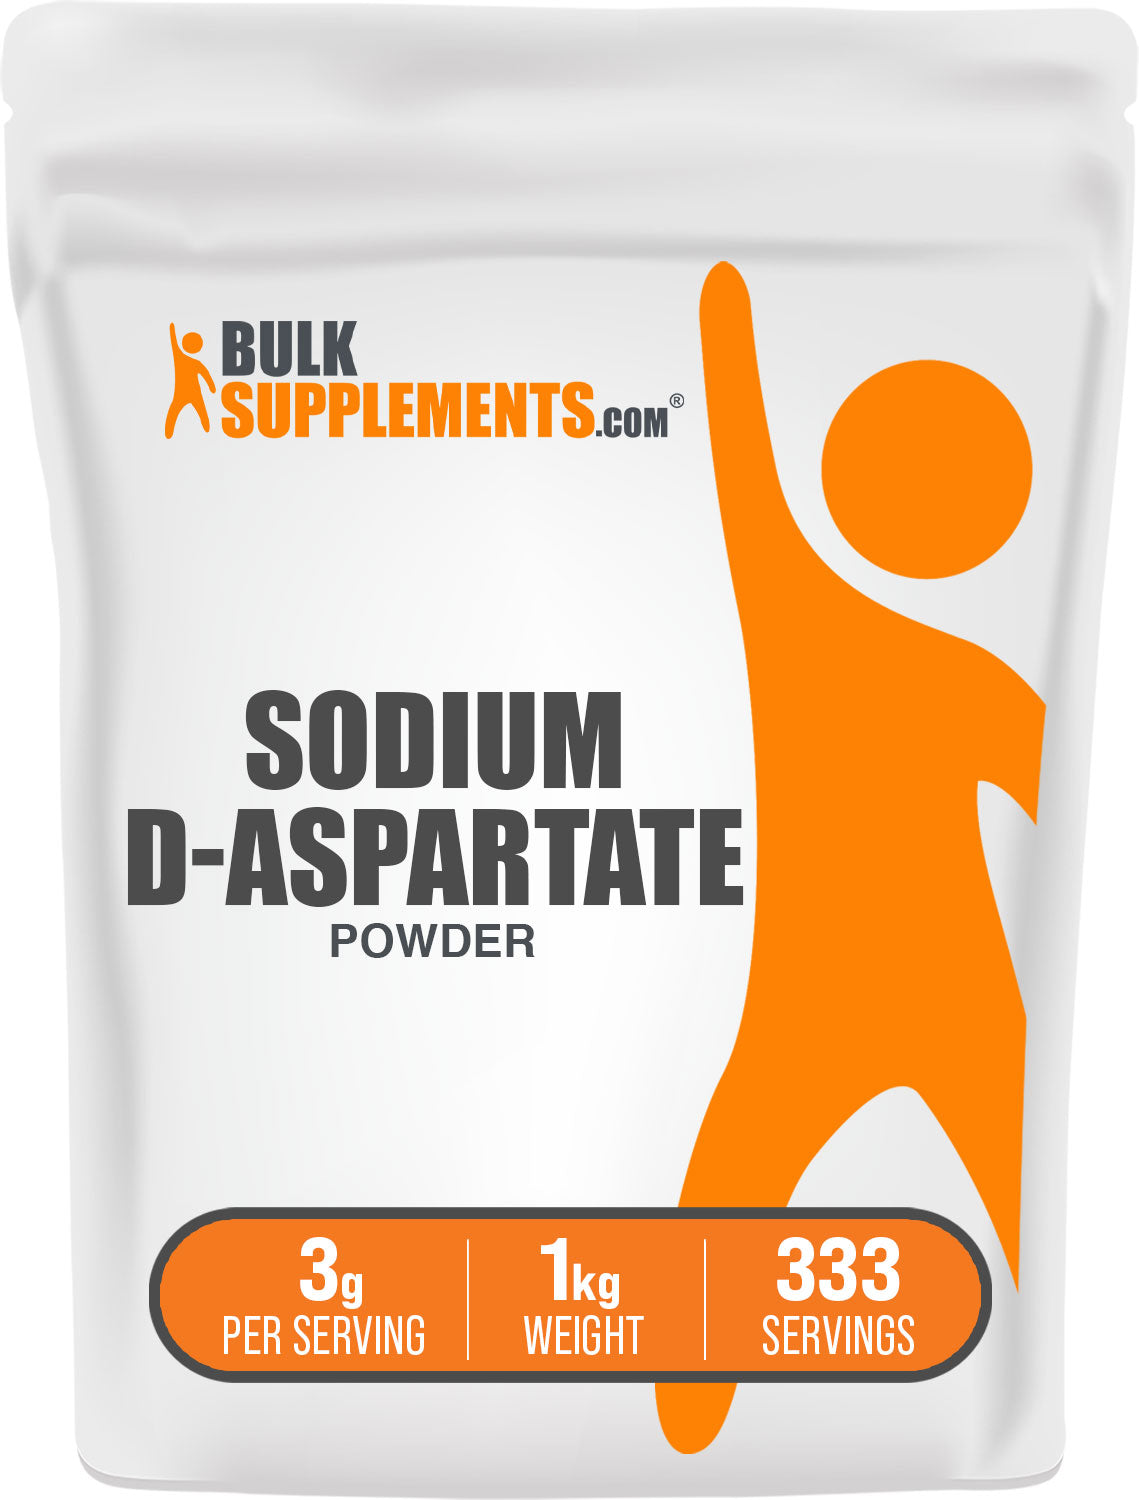 BulkSupplements Sodium D-Aspartate Powder 1kg bag